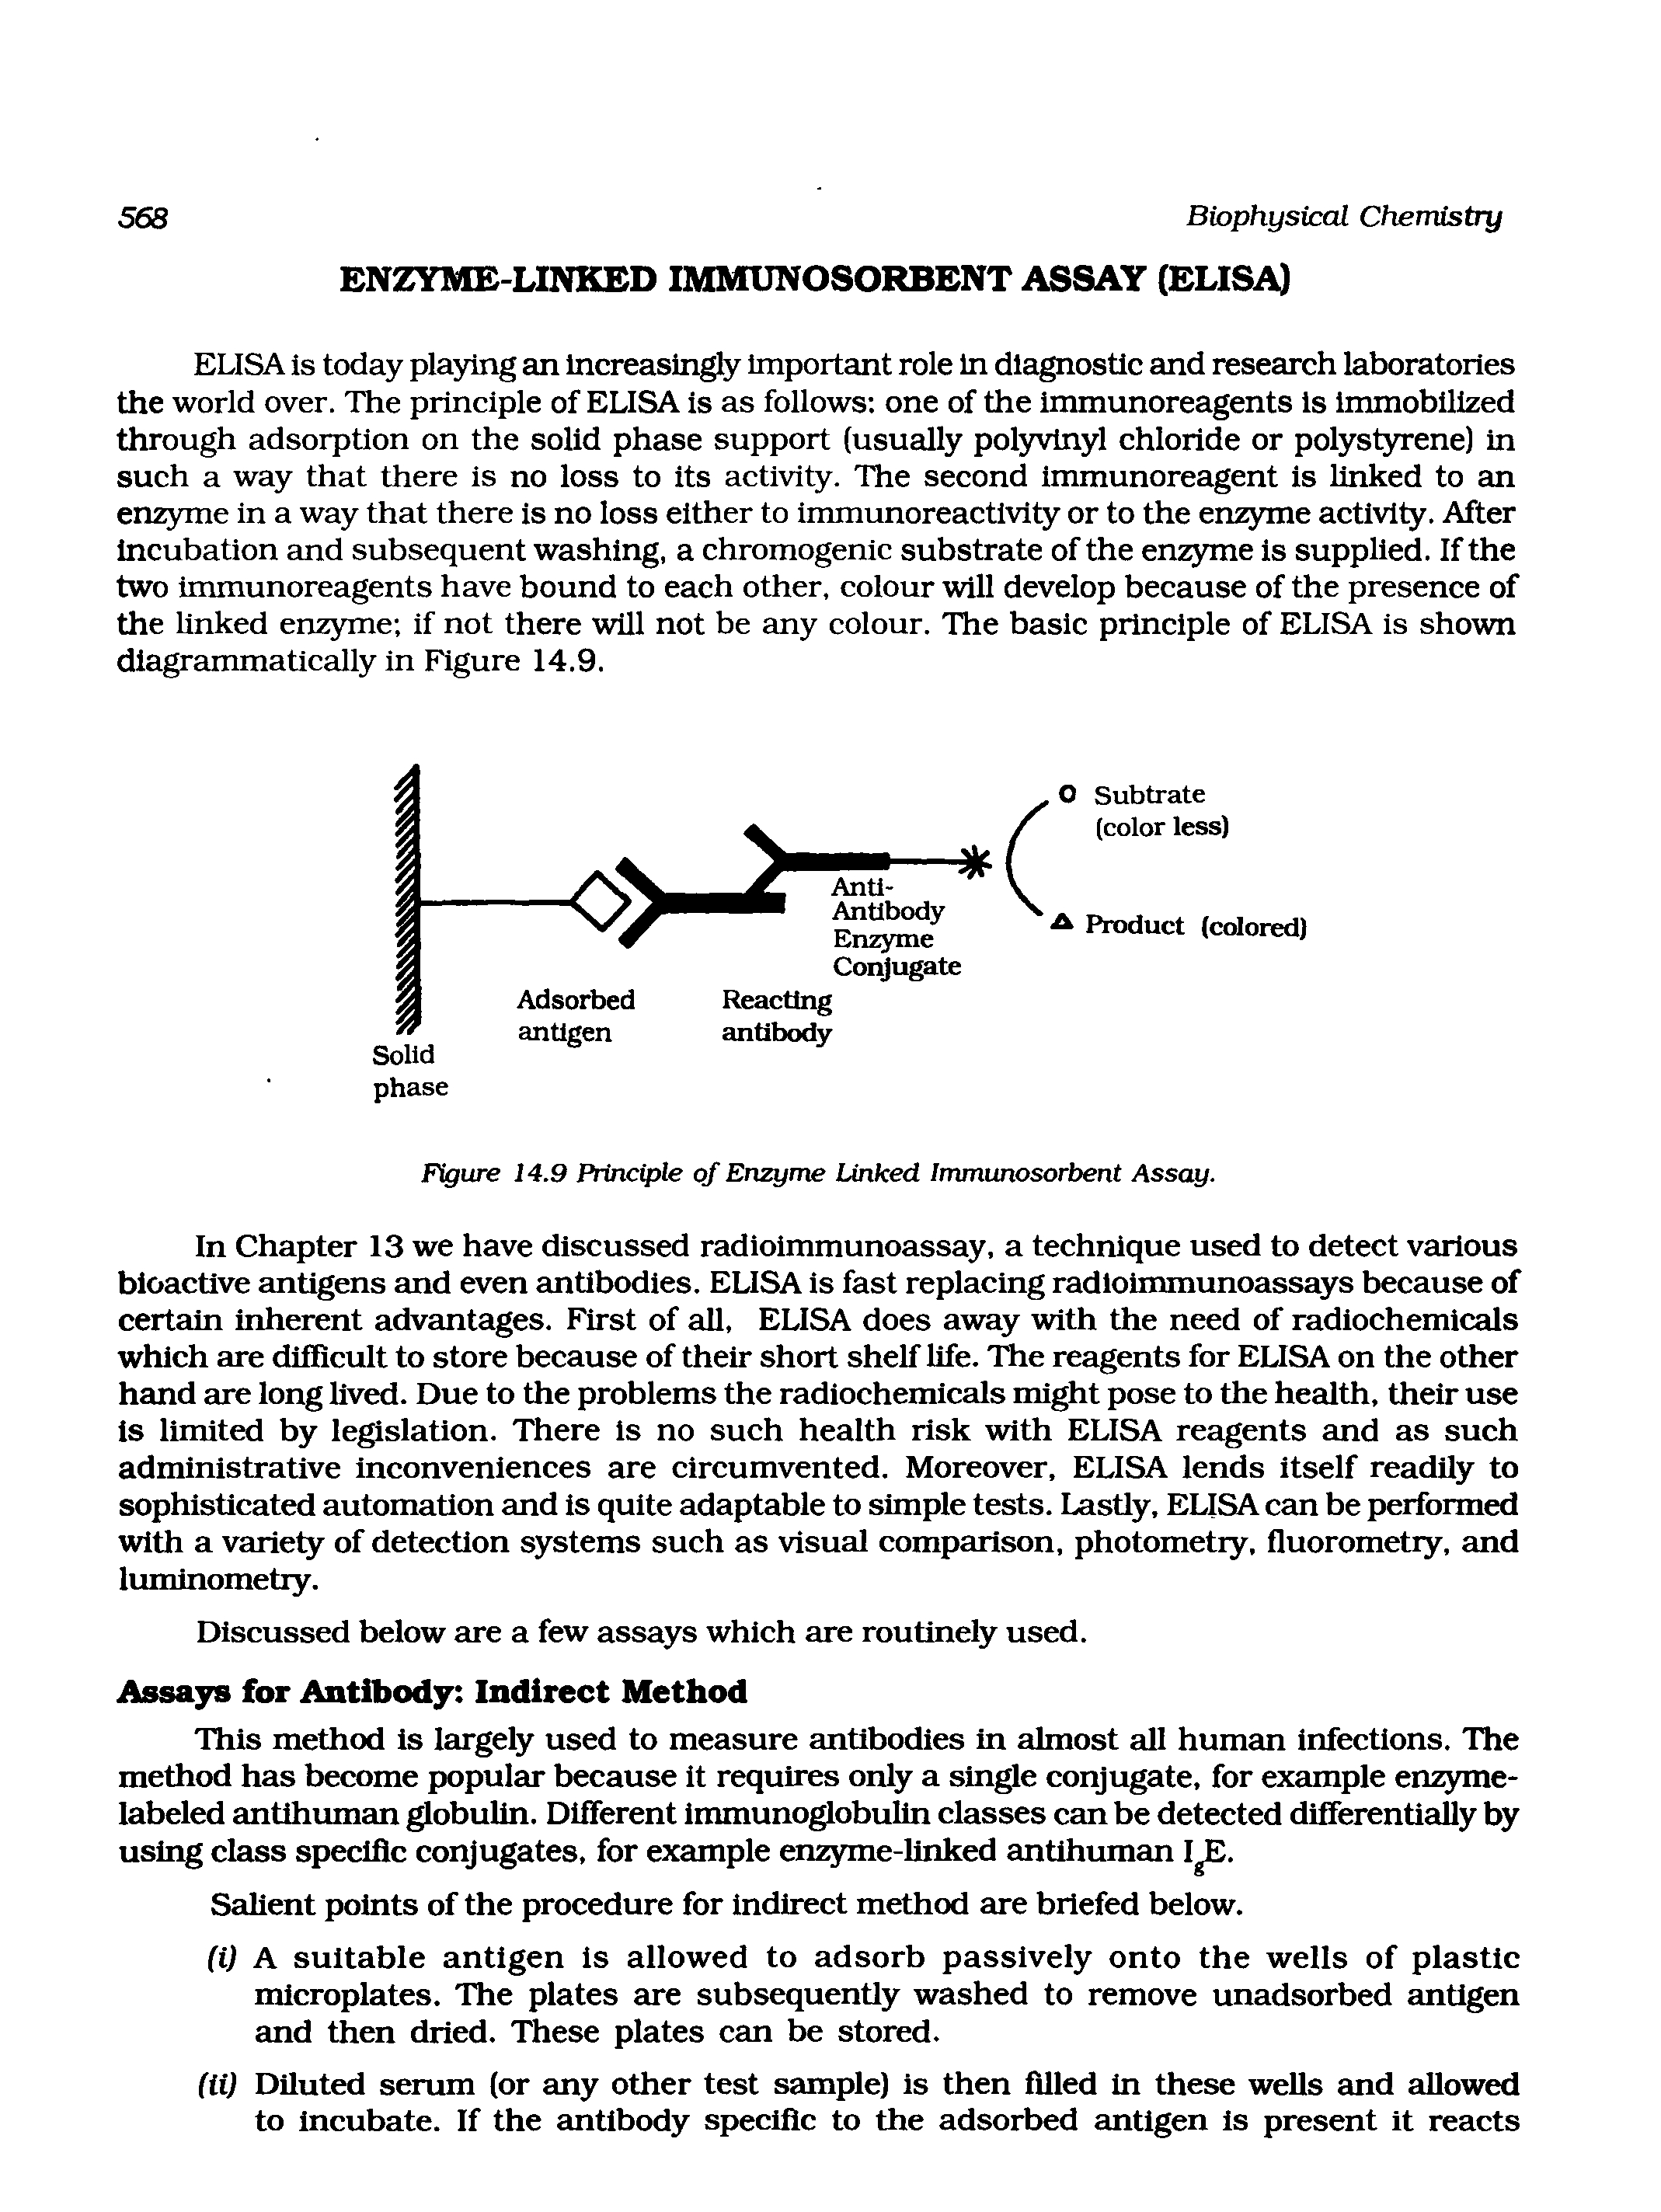 Figure 14.9 Principle of Enzyme Linked Immunosorbent Assay.